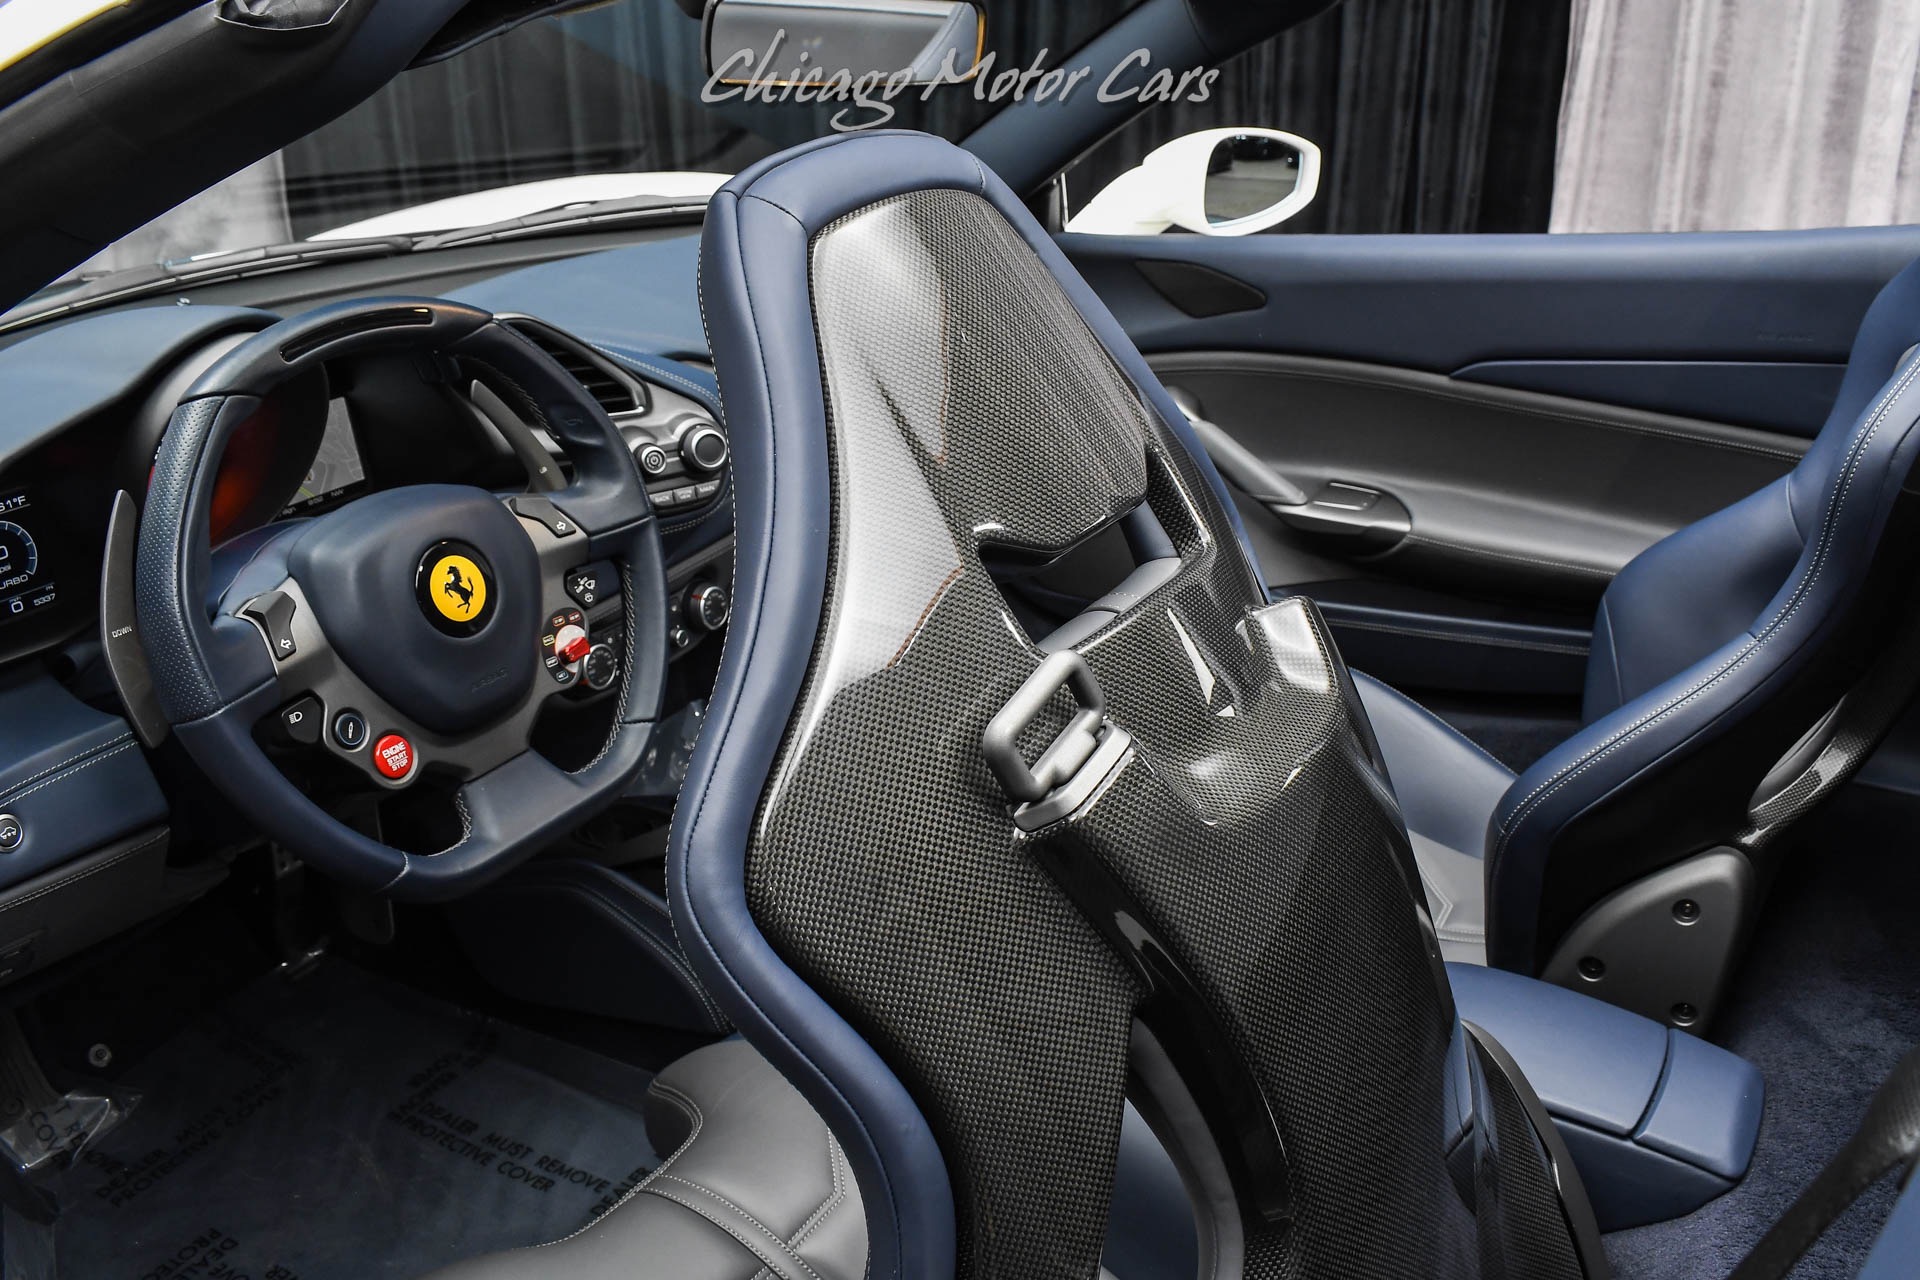 Used-2018-Ferrari-488-Spider-Over-100k-in-Options-Carbon-Fiber-Race-Seats-Pristine-Example